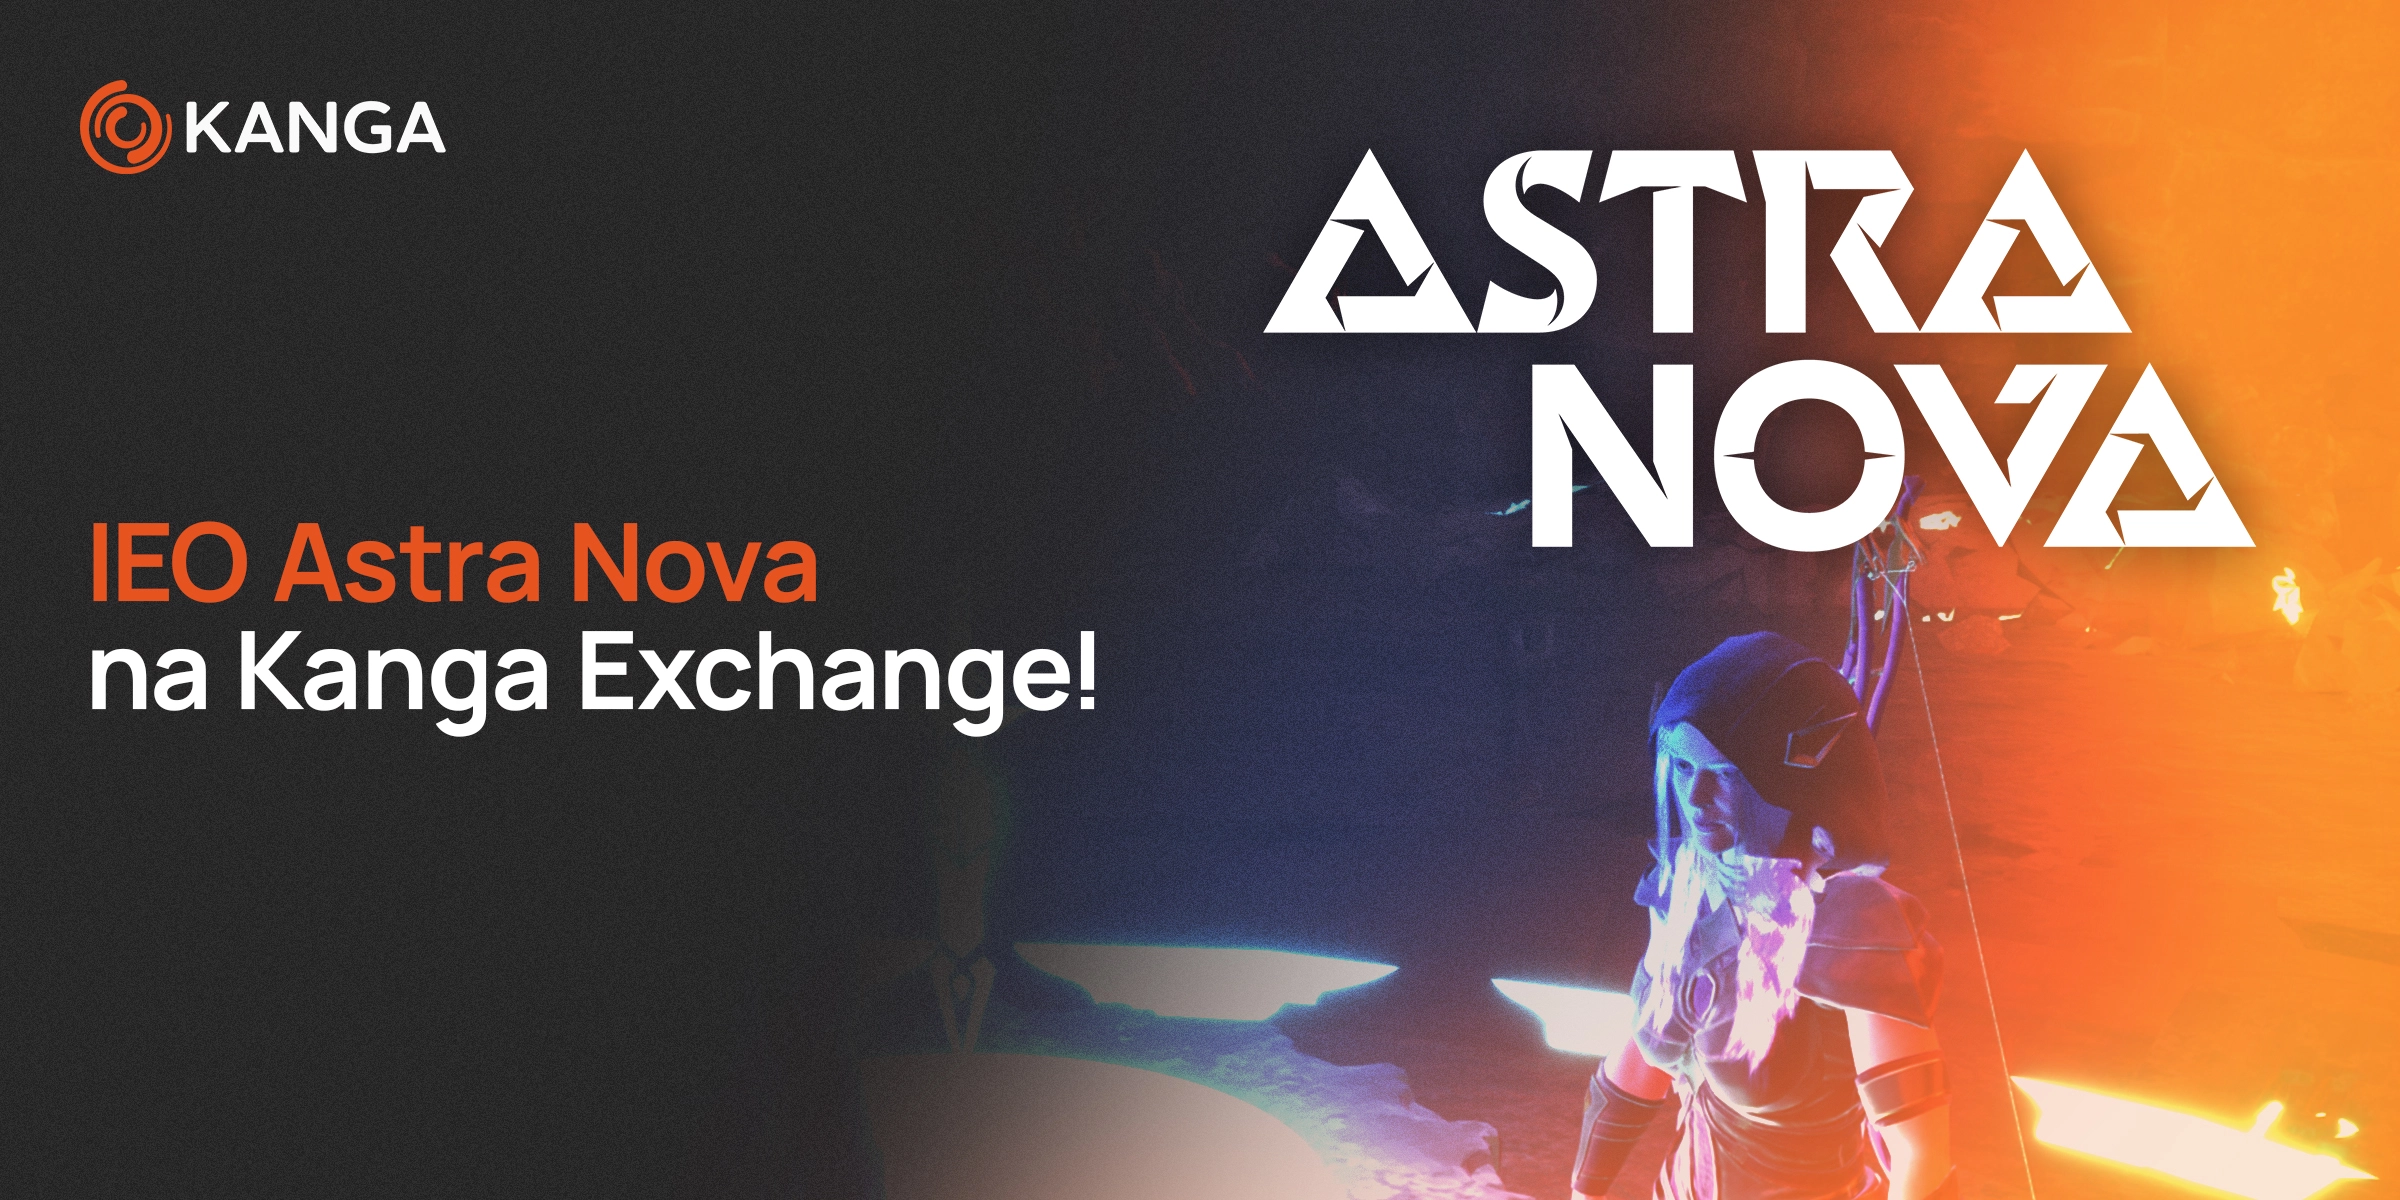 IEO Astra Nova na Kanga Exchange!